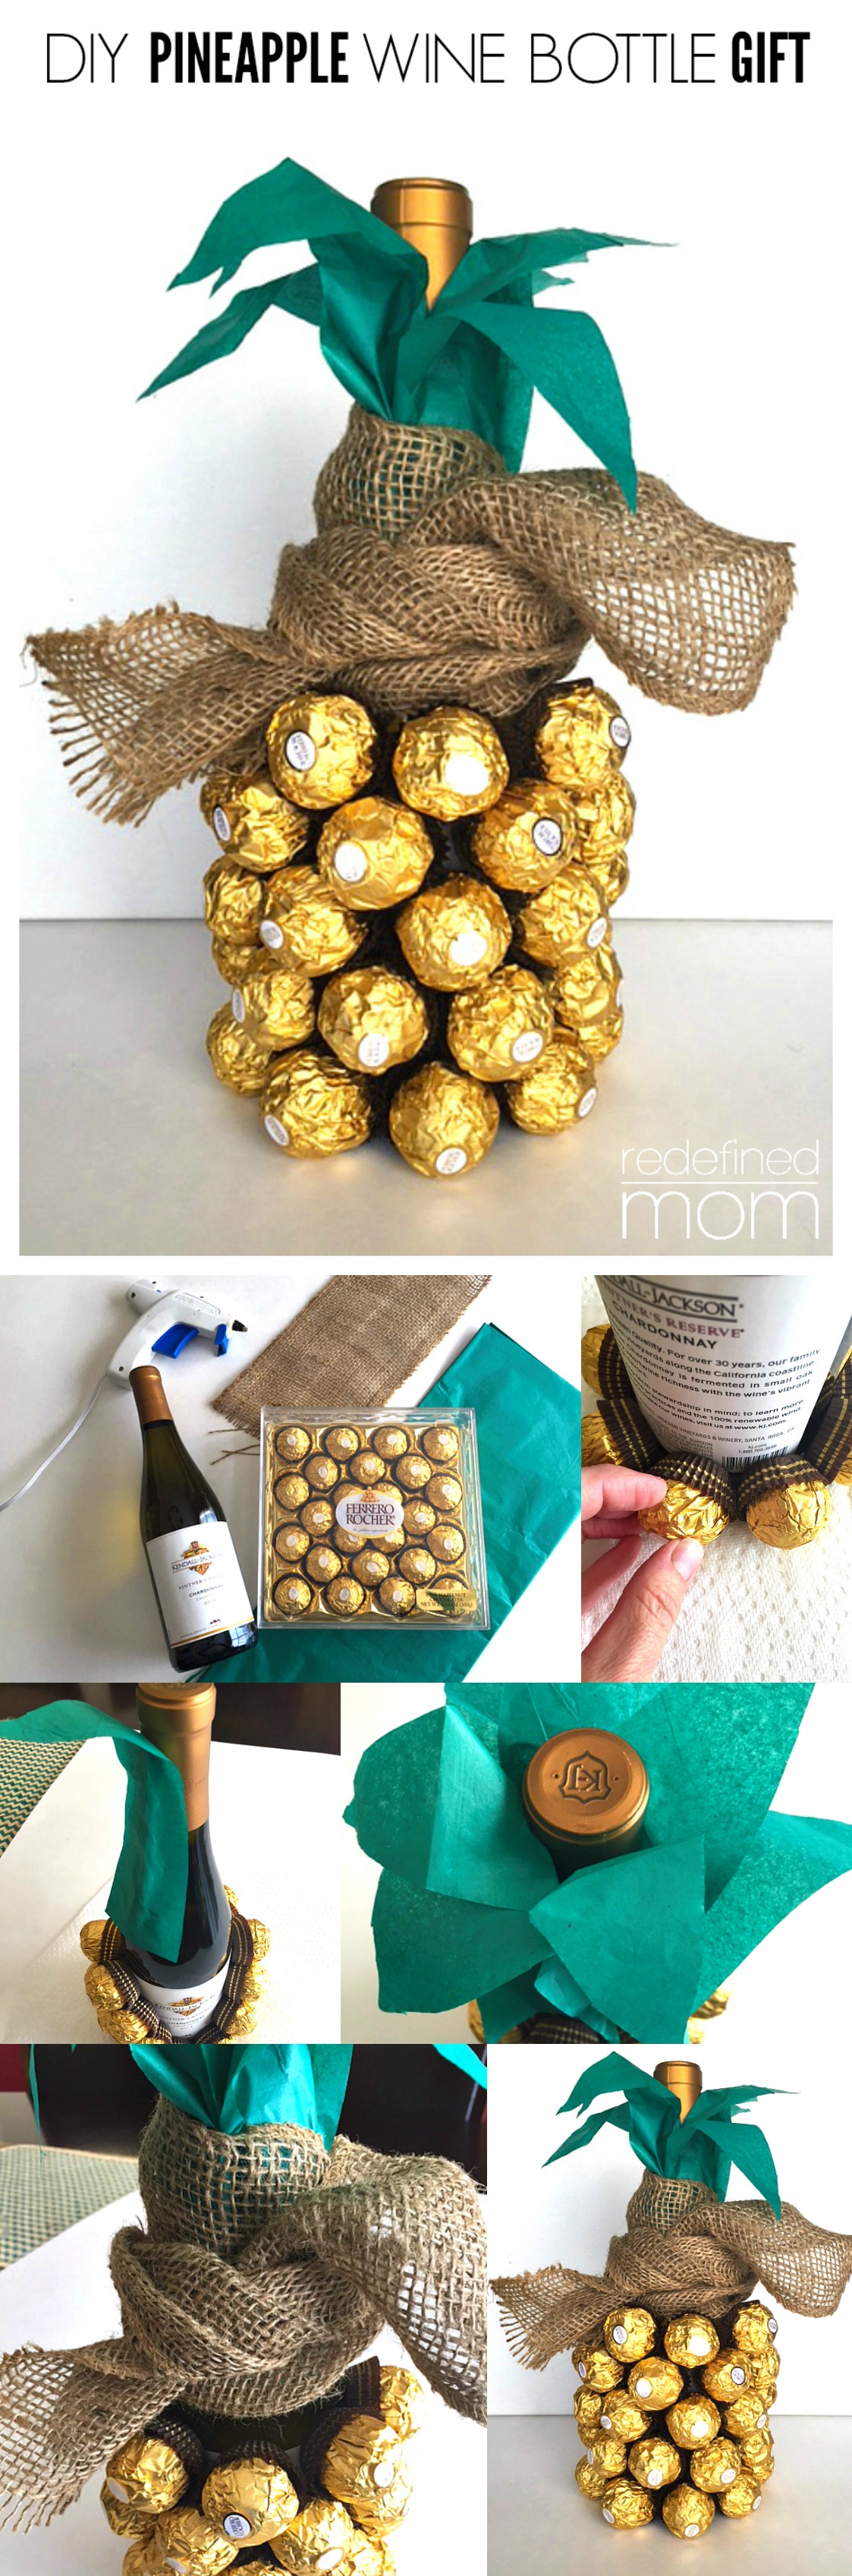 DIY Pineapple Wine Bottle Gift Collage